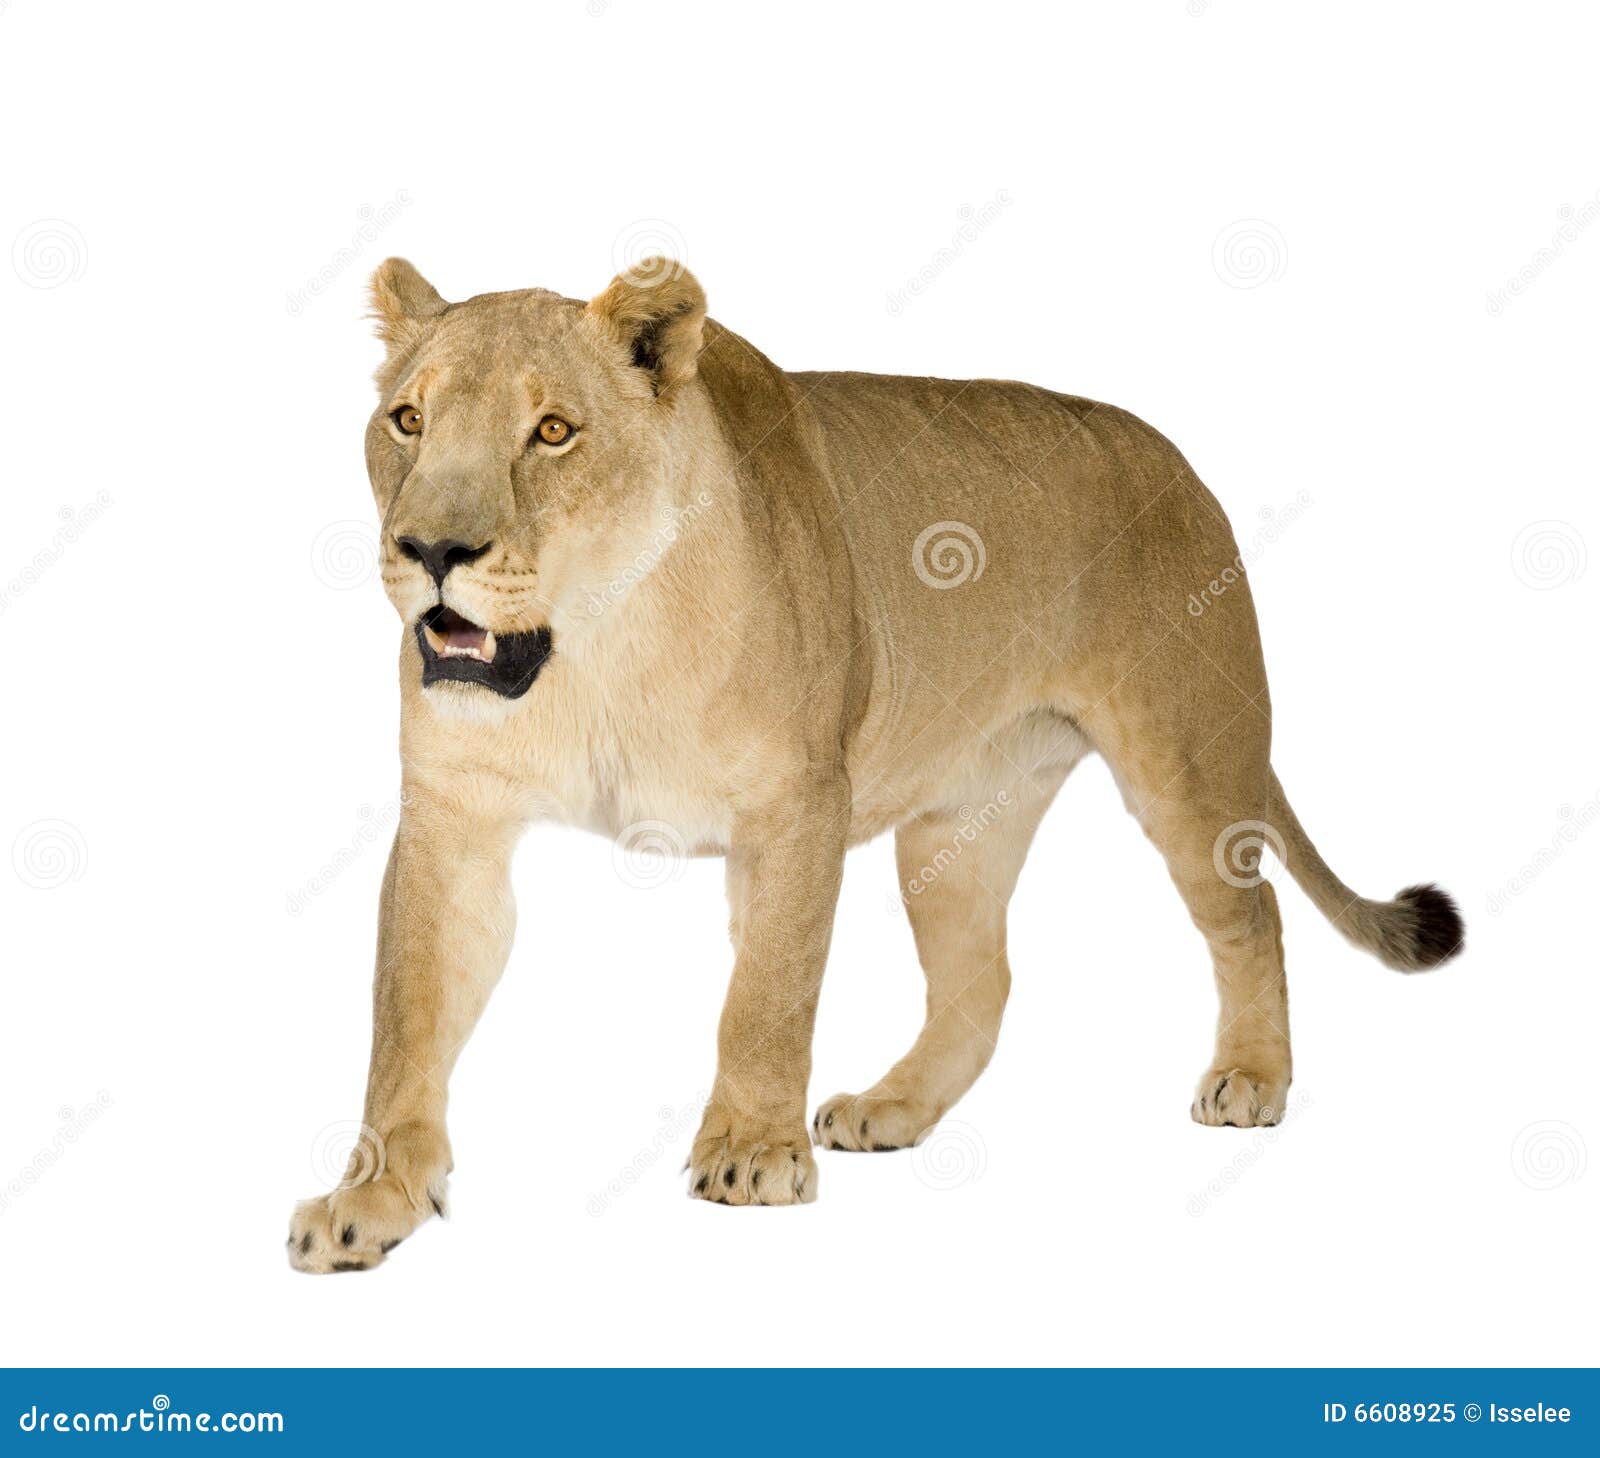 clipart lion background - photo #41